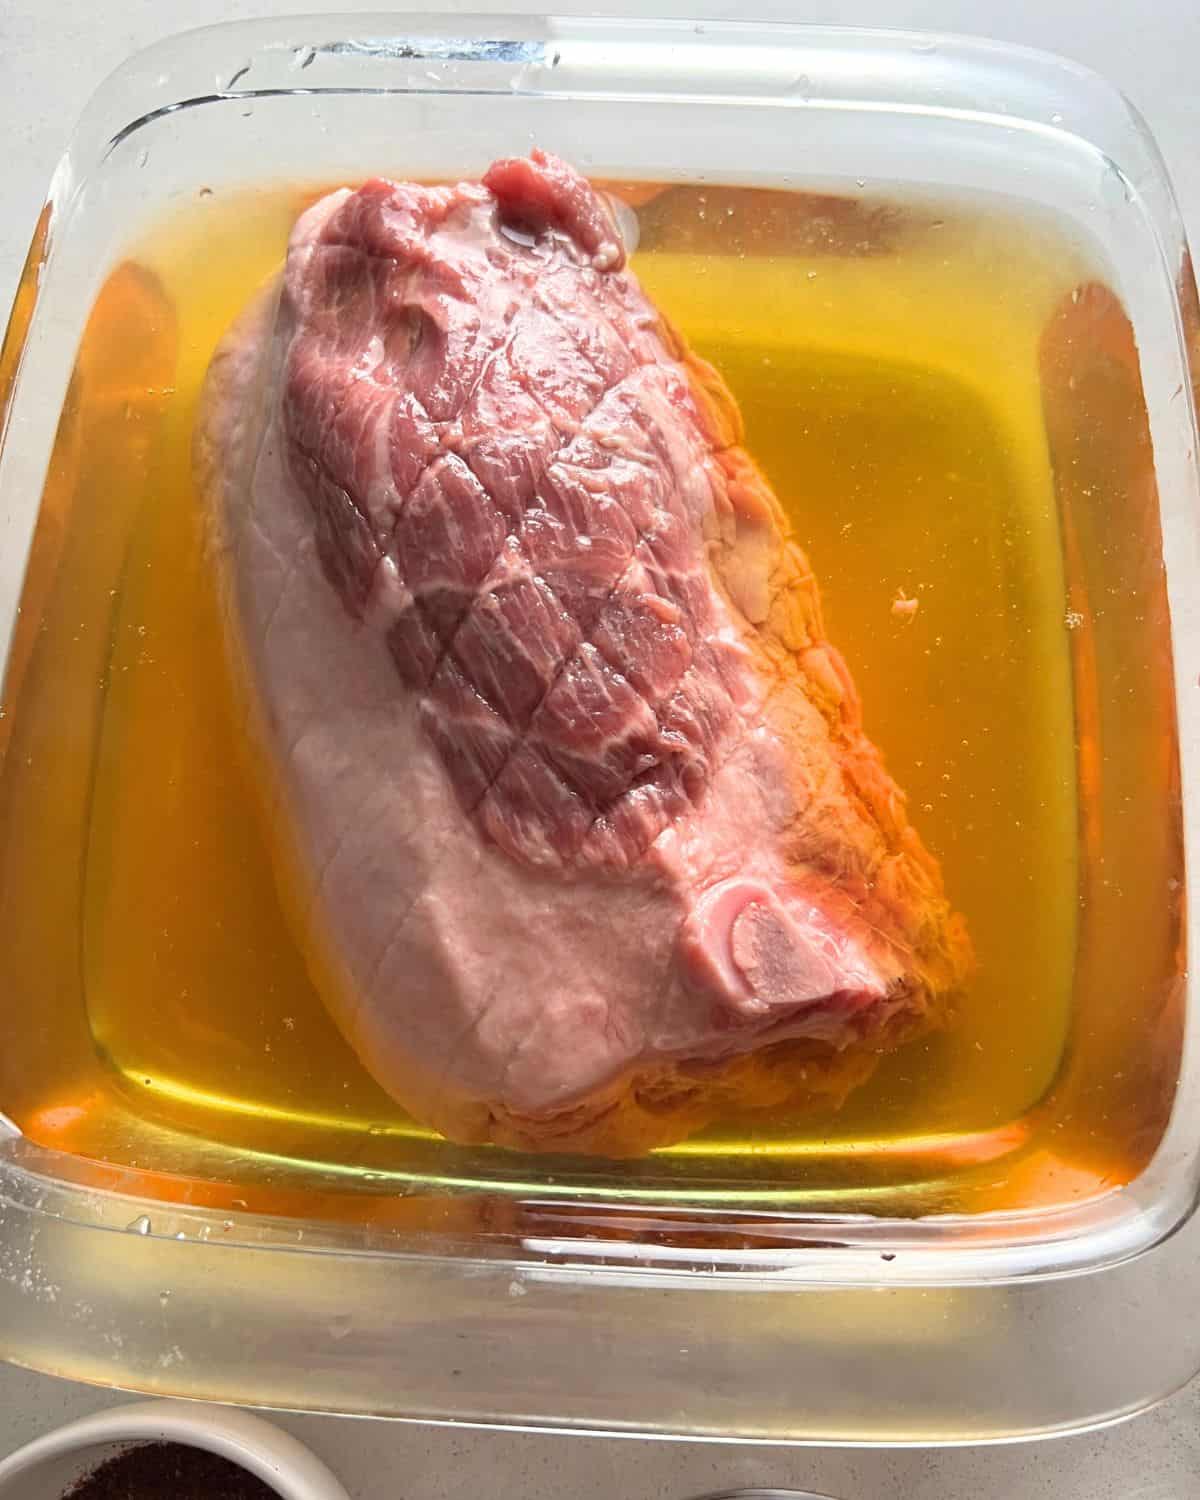 Pork shoulder roast brining in a bowl. 